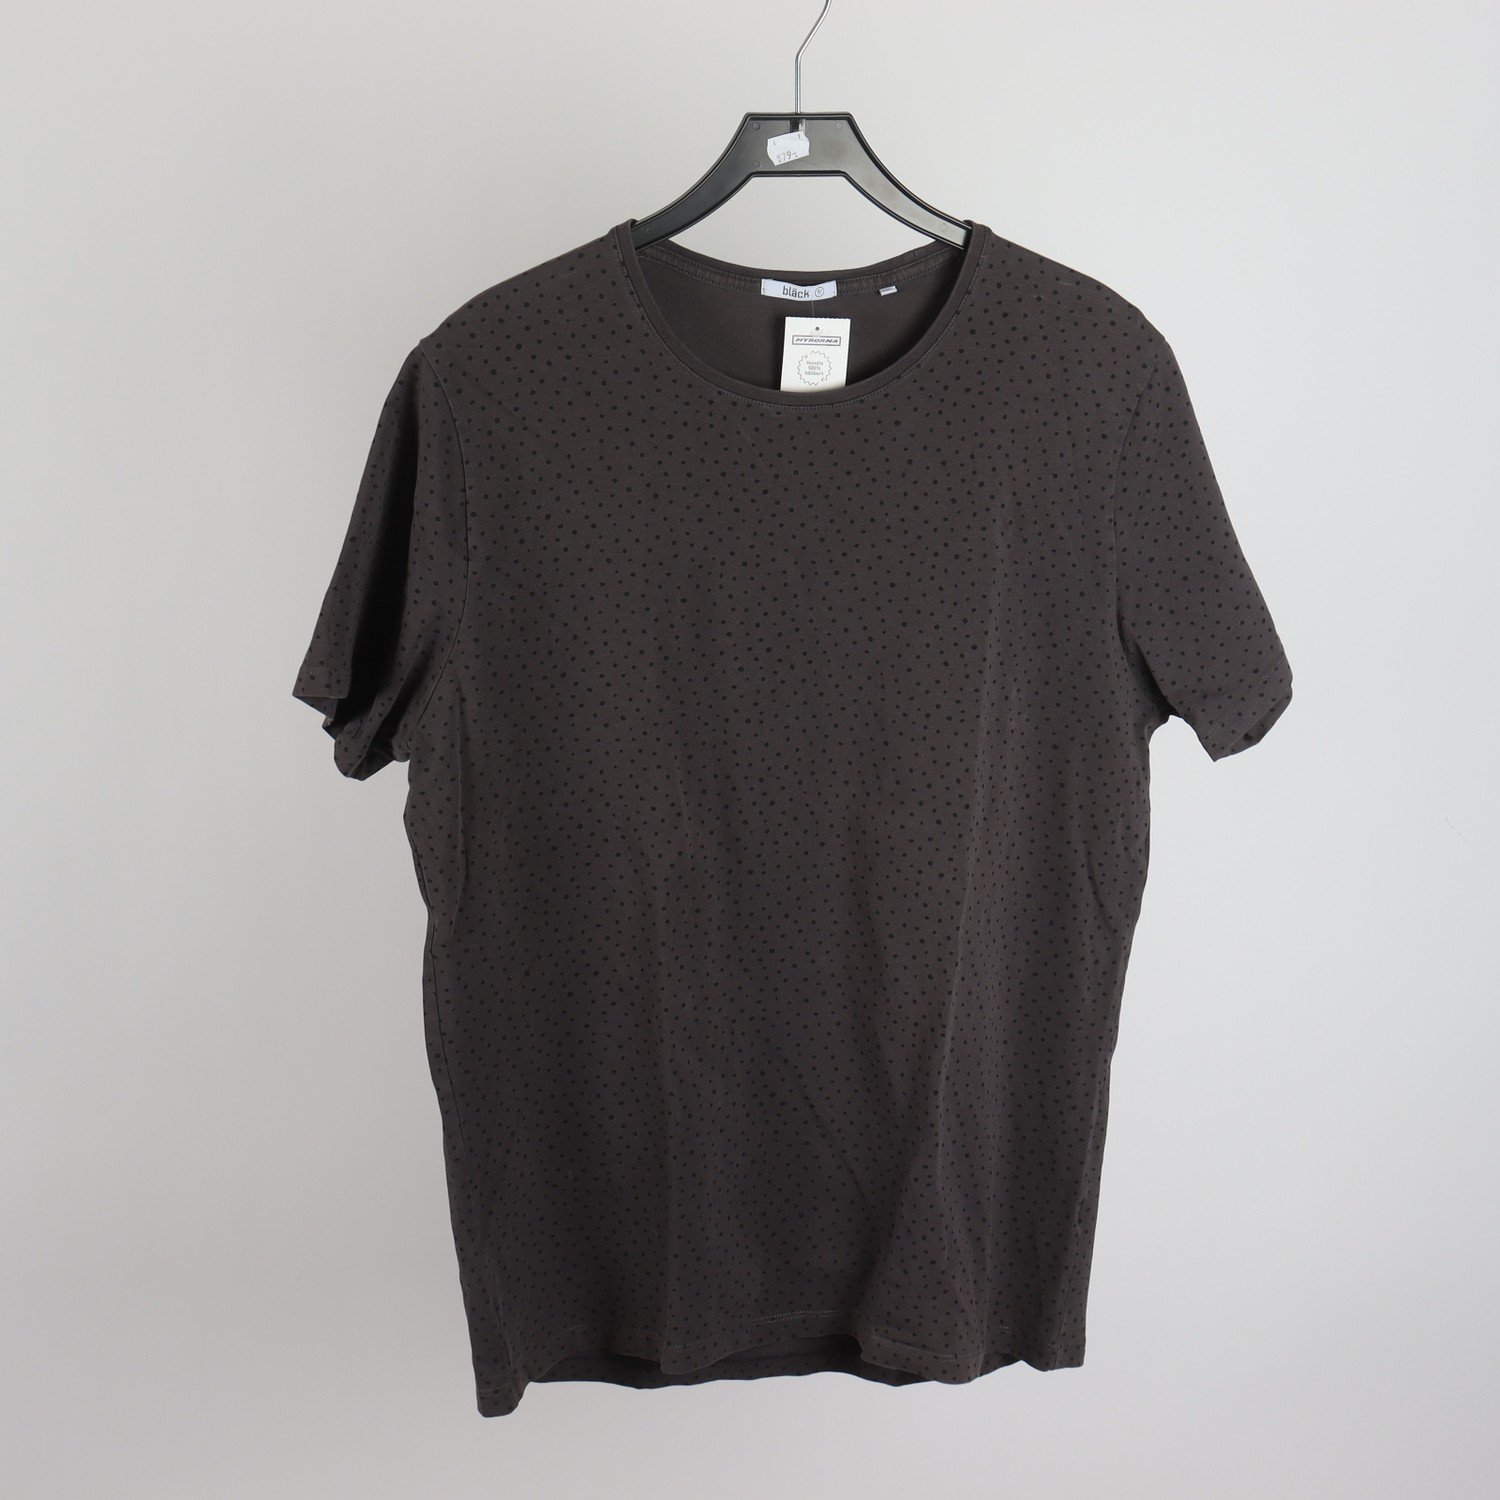 T-Shirt, Bläck, Grå, Stl. XL